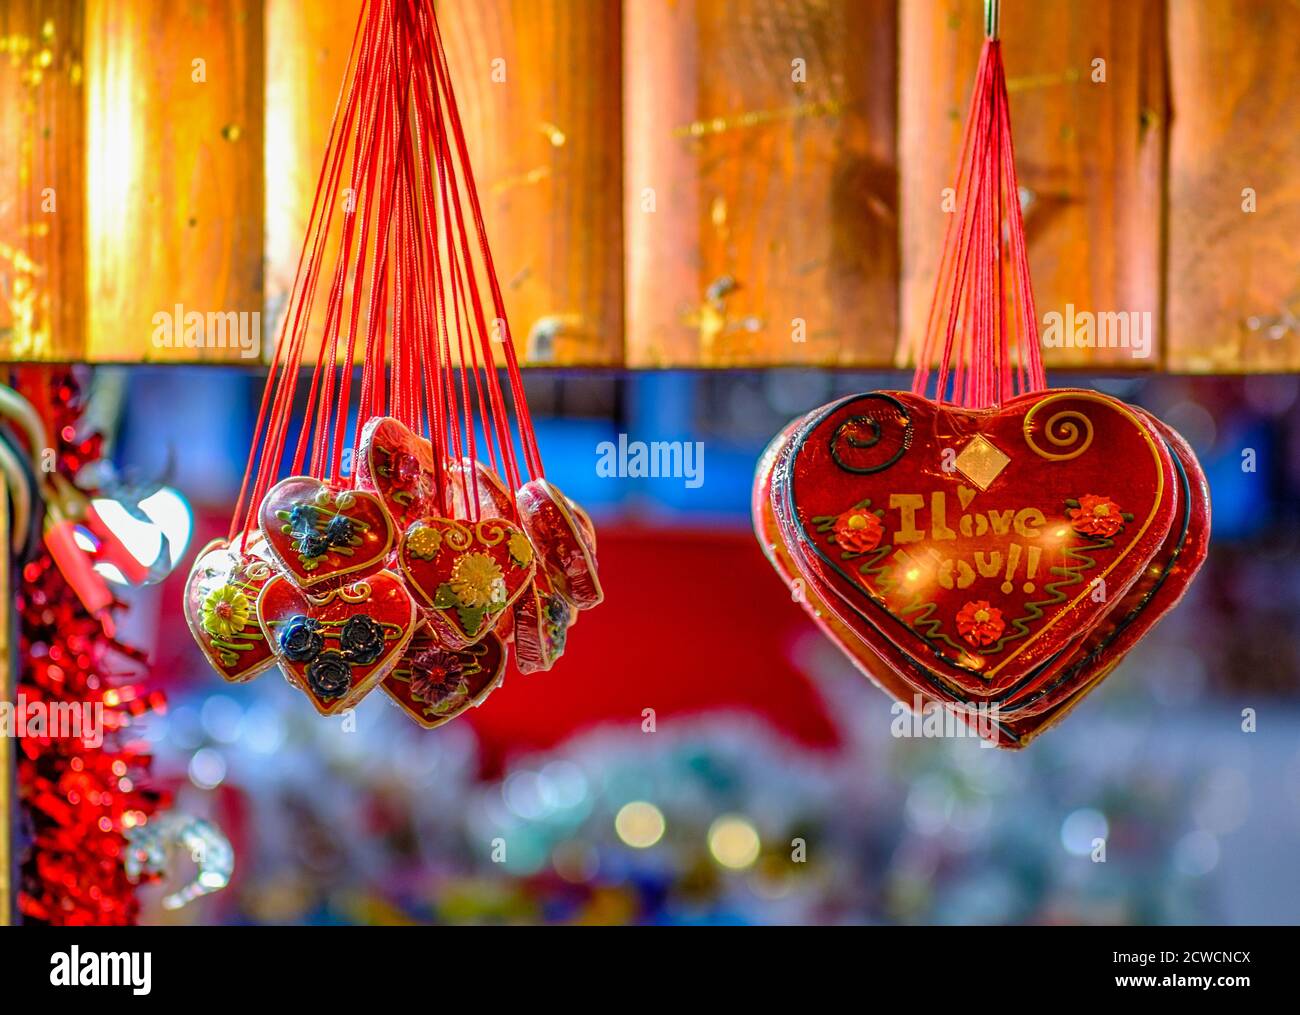 Belgrade / Serbia - December 15, 2019: Sweets and souvenirs at a Belgrade Christmas market in pedestrian Knez Mihailova street in Belgrade, Serbia Stock Photo